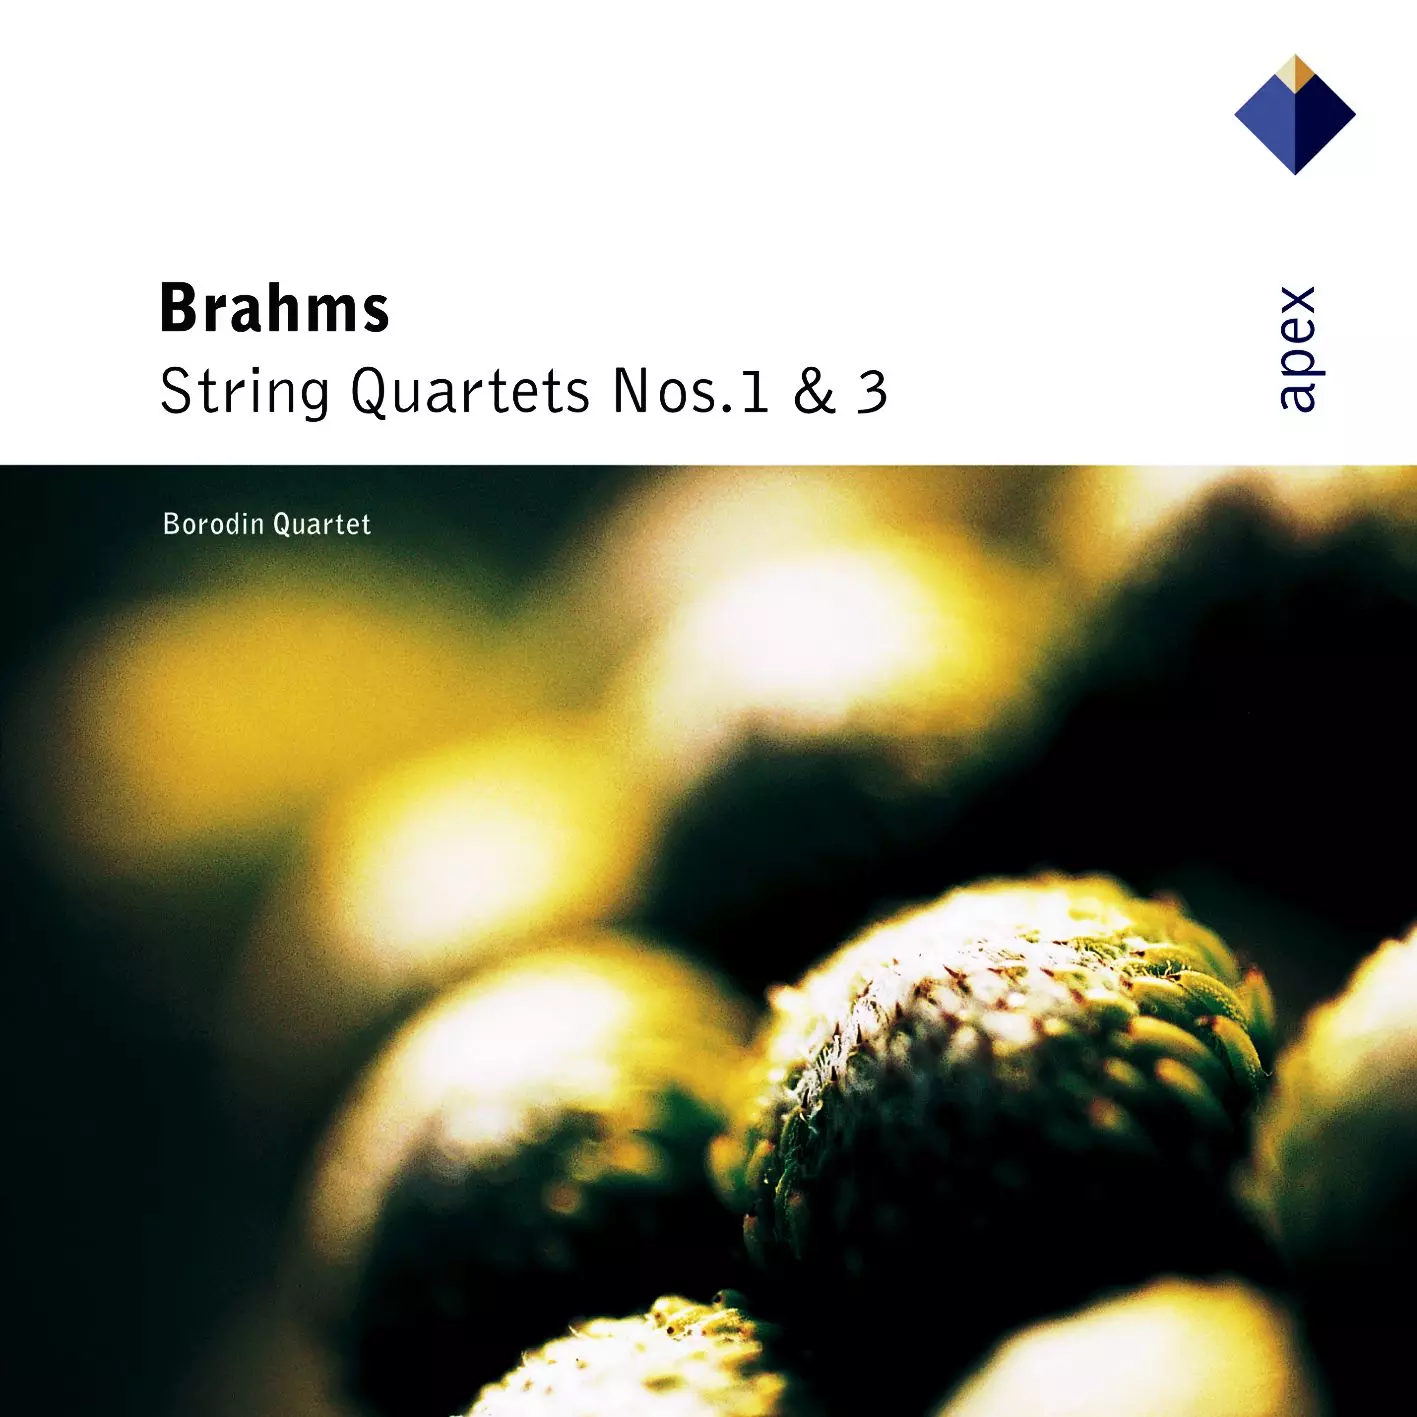 Brahms: String Quartets 1 & 3